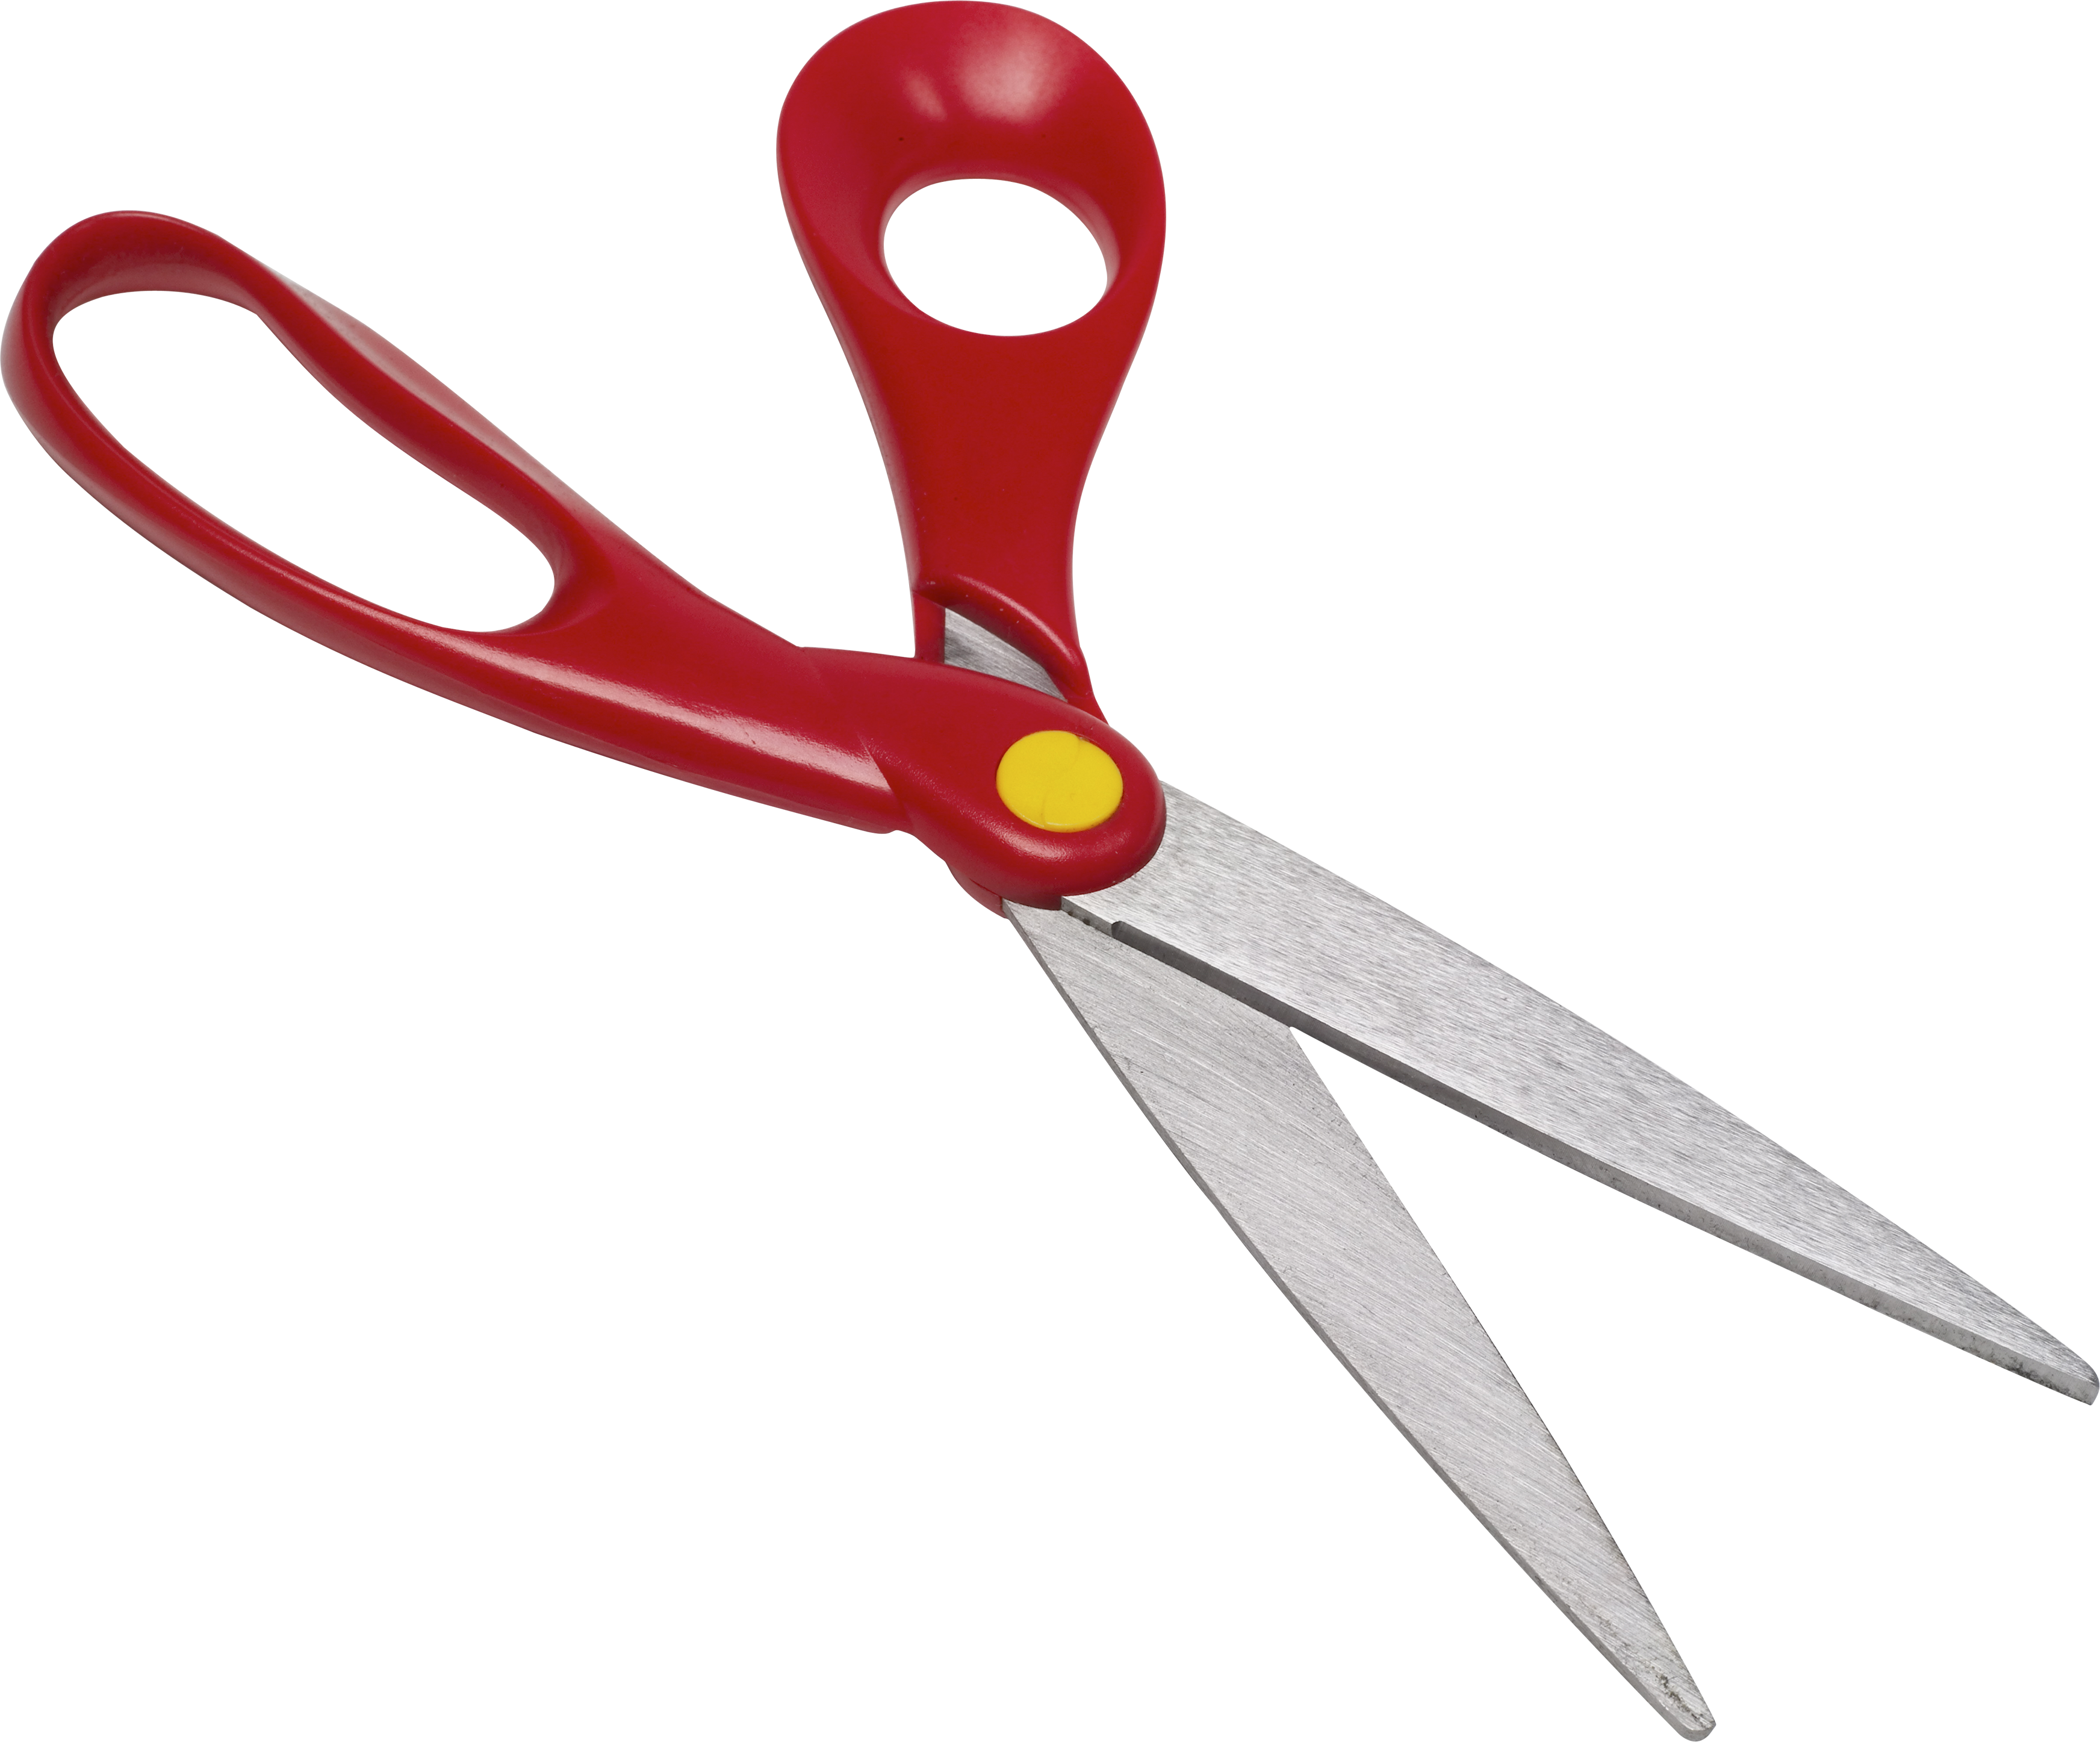 Scissors PNG images 